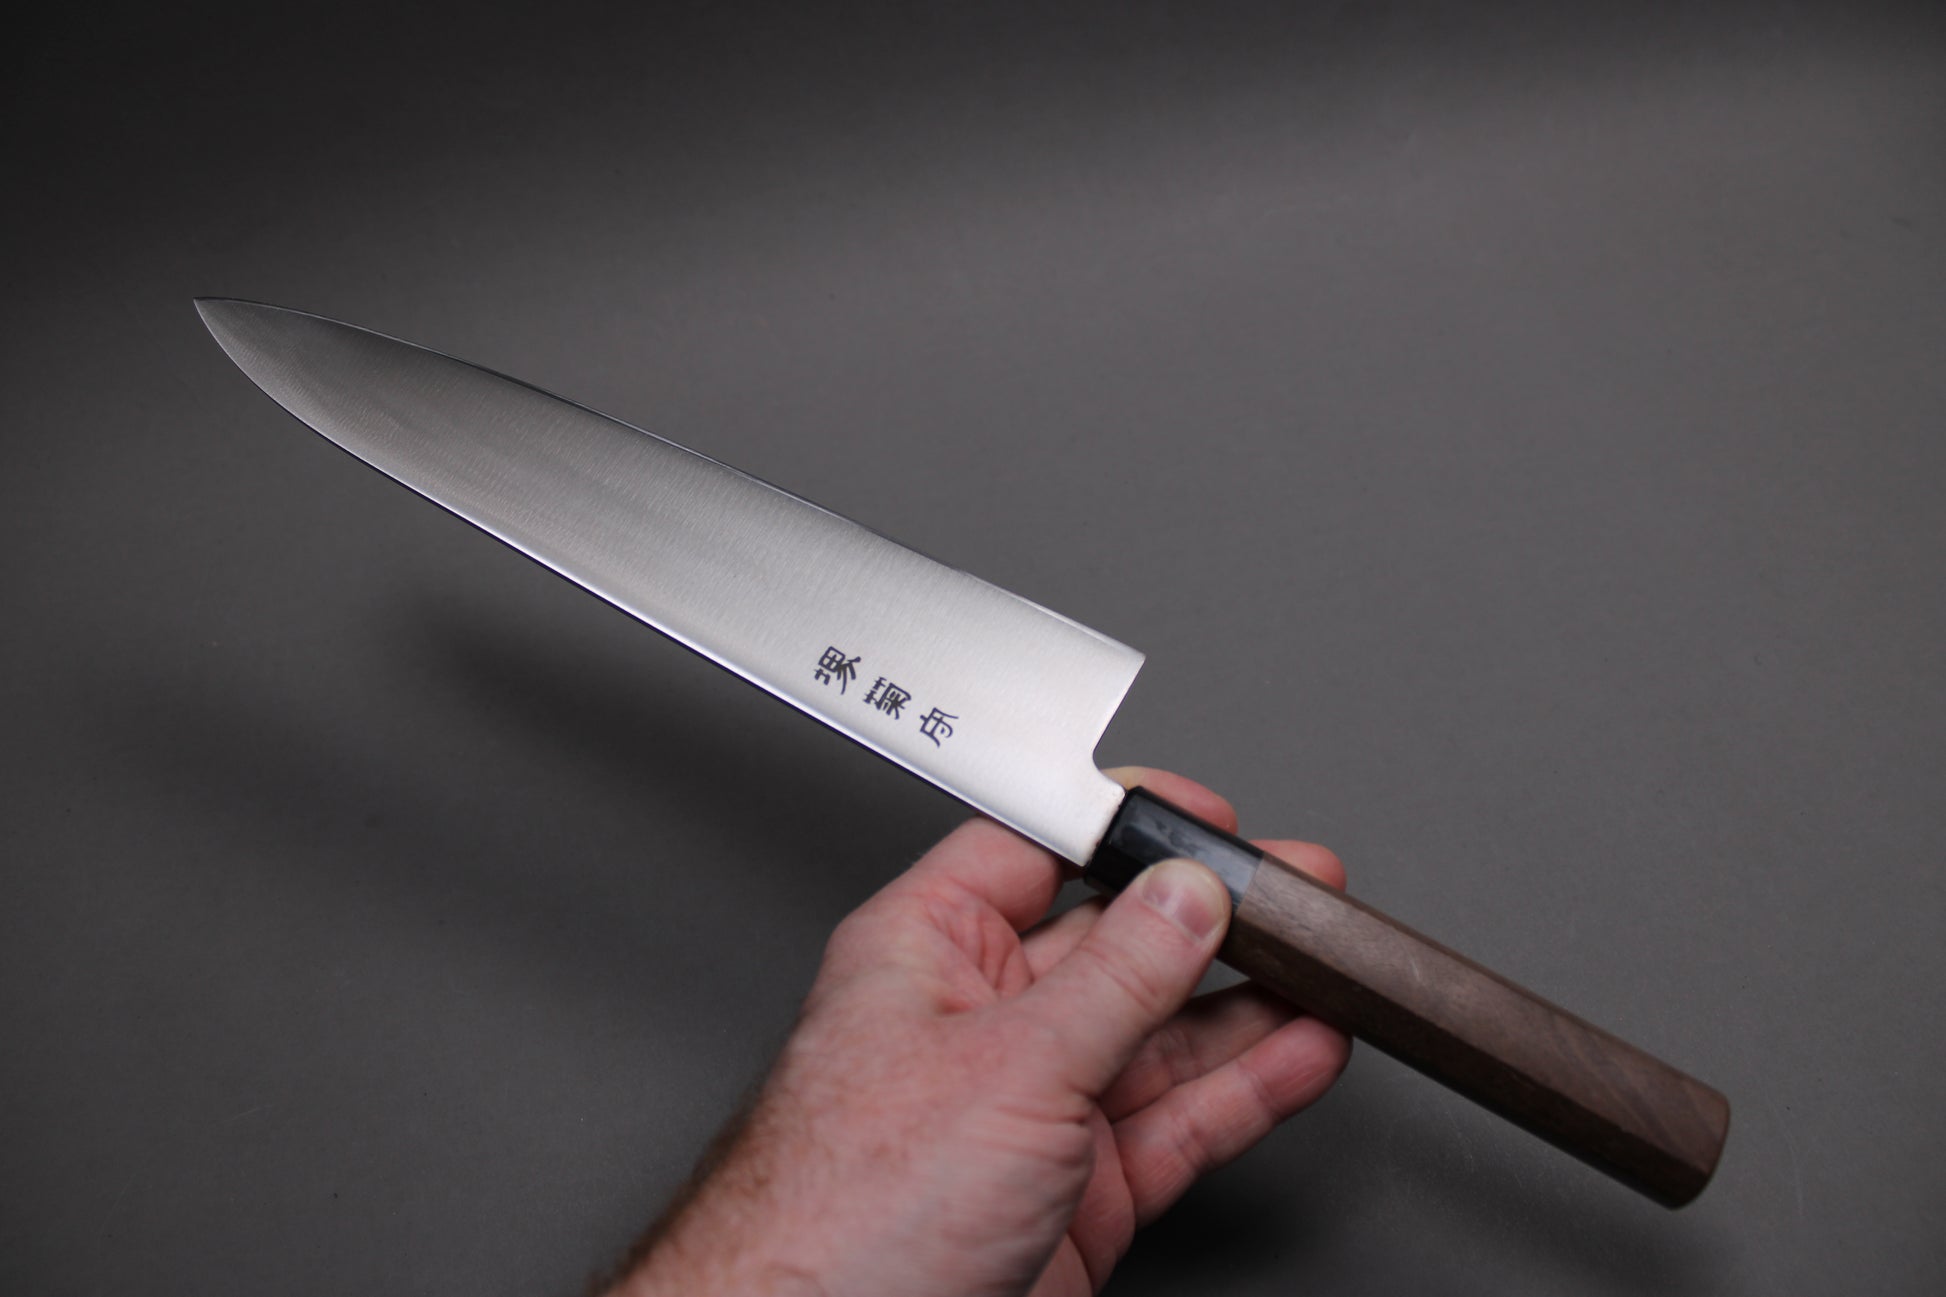 molybdenum aus8 stainless steel knife made in sakai japan 